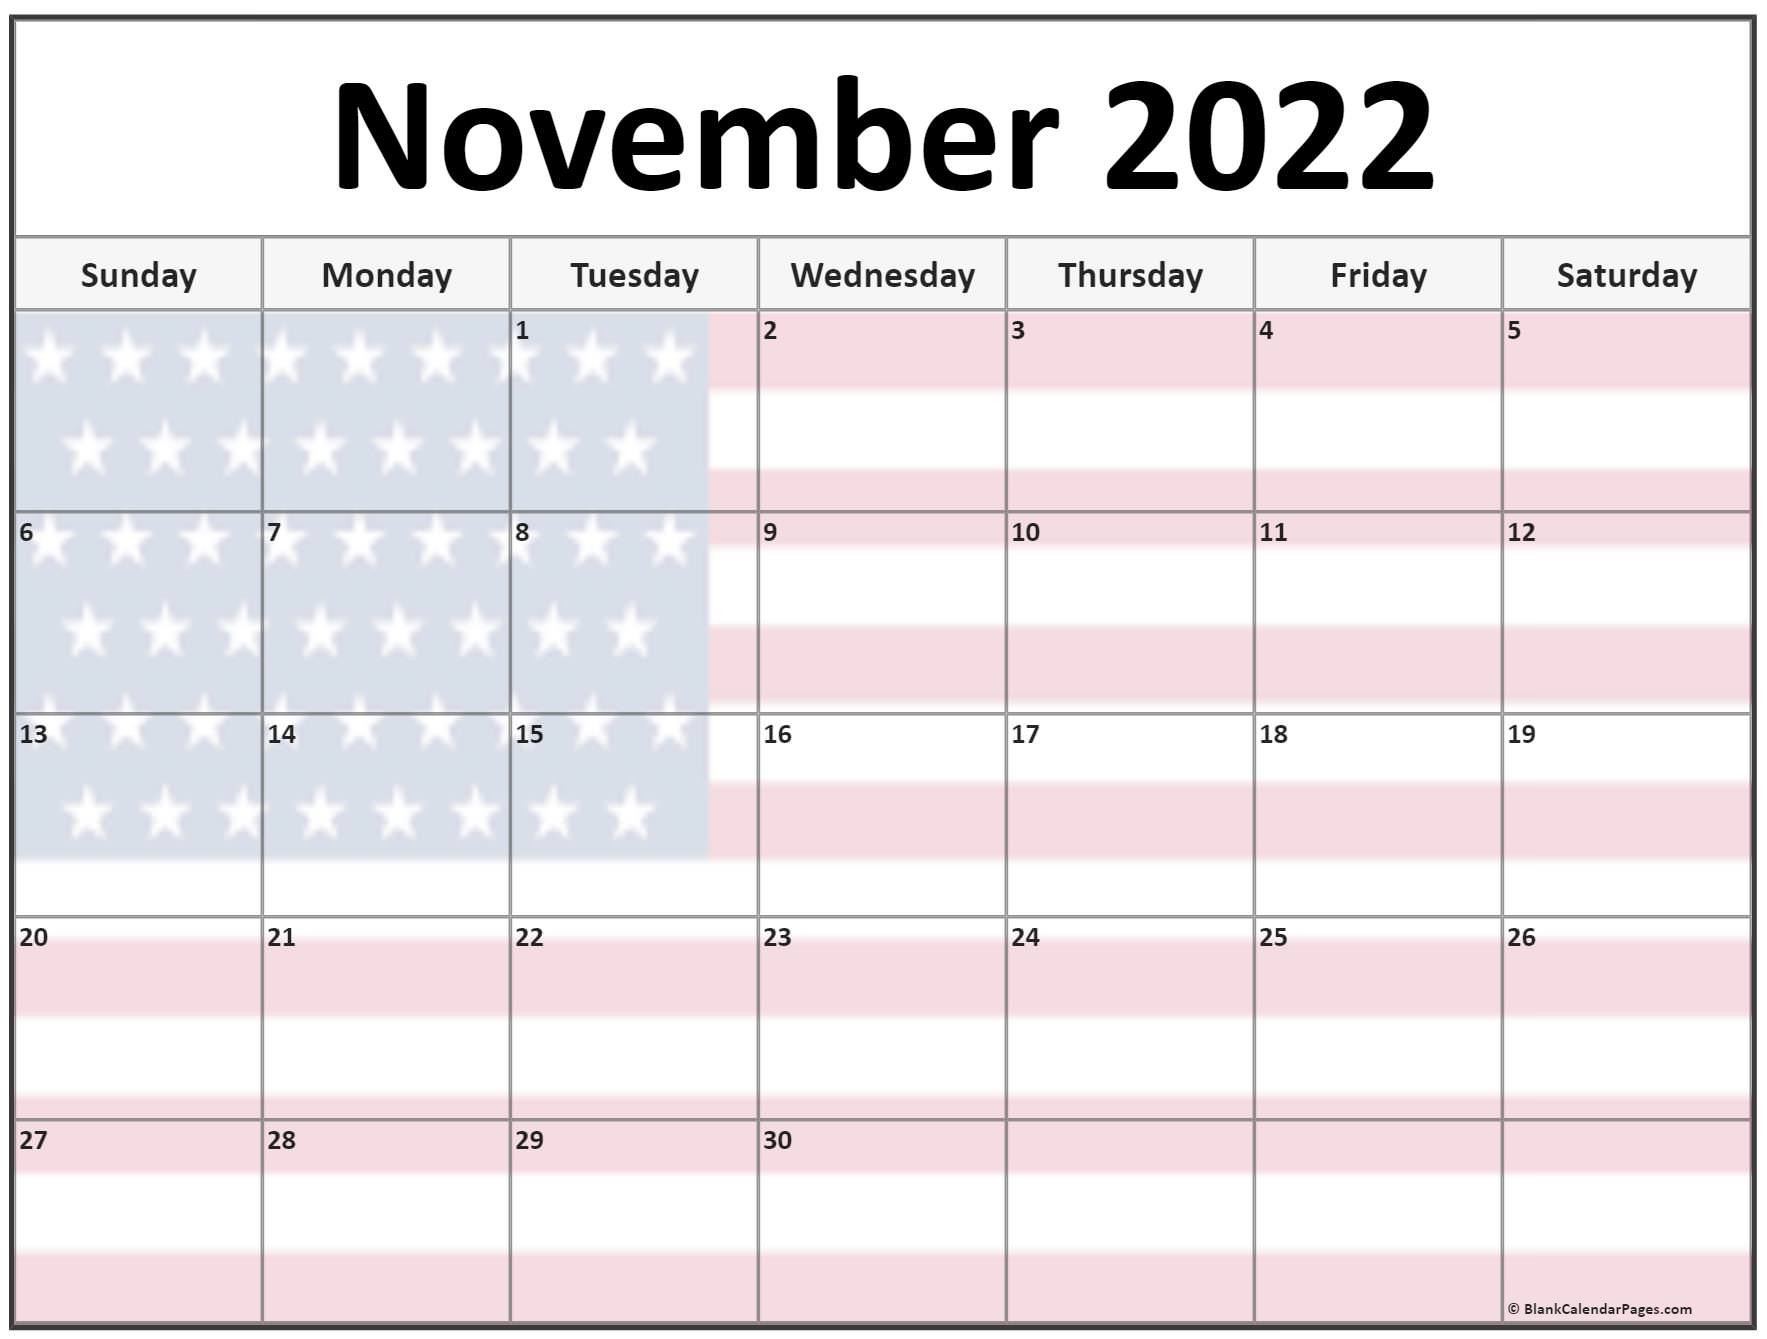 Collection Of November 2022 Photo Calendars With Image  Free Printable Calendar 2022 November